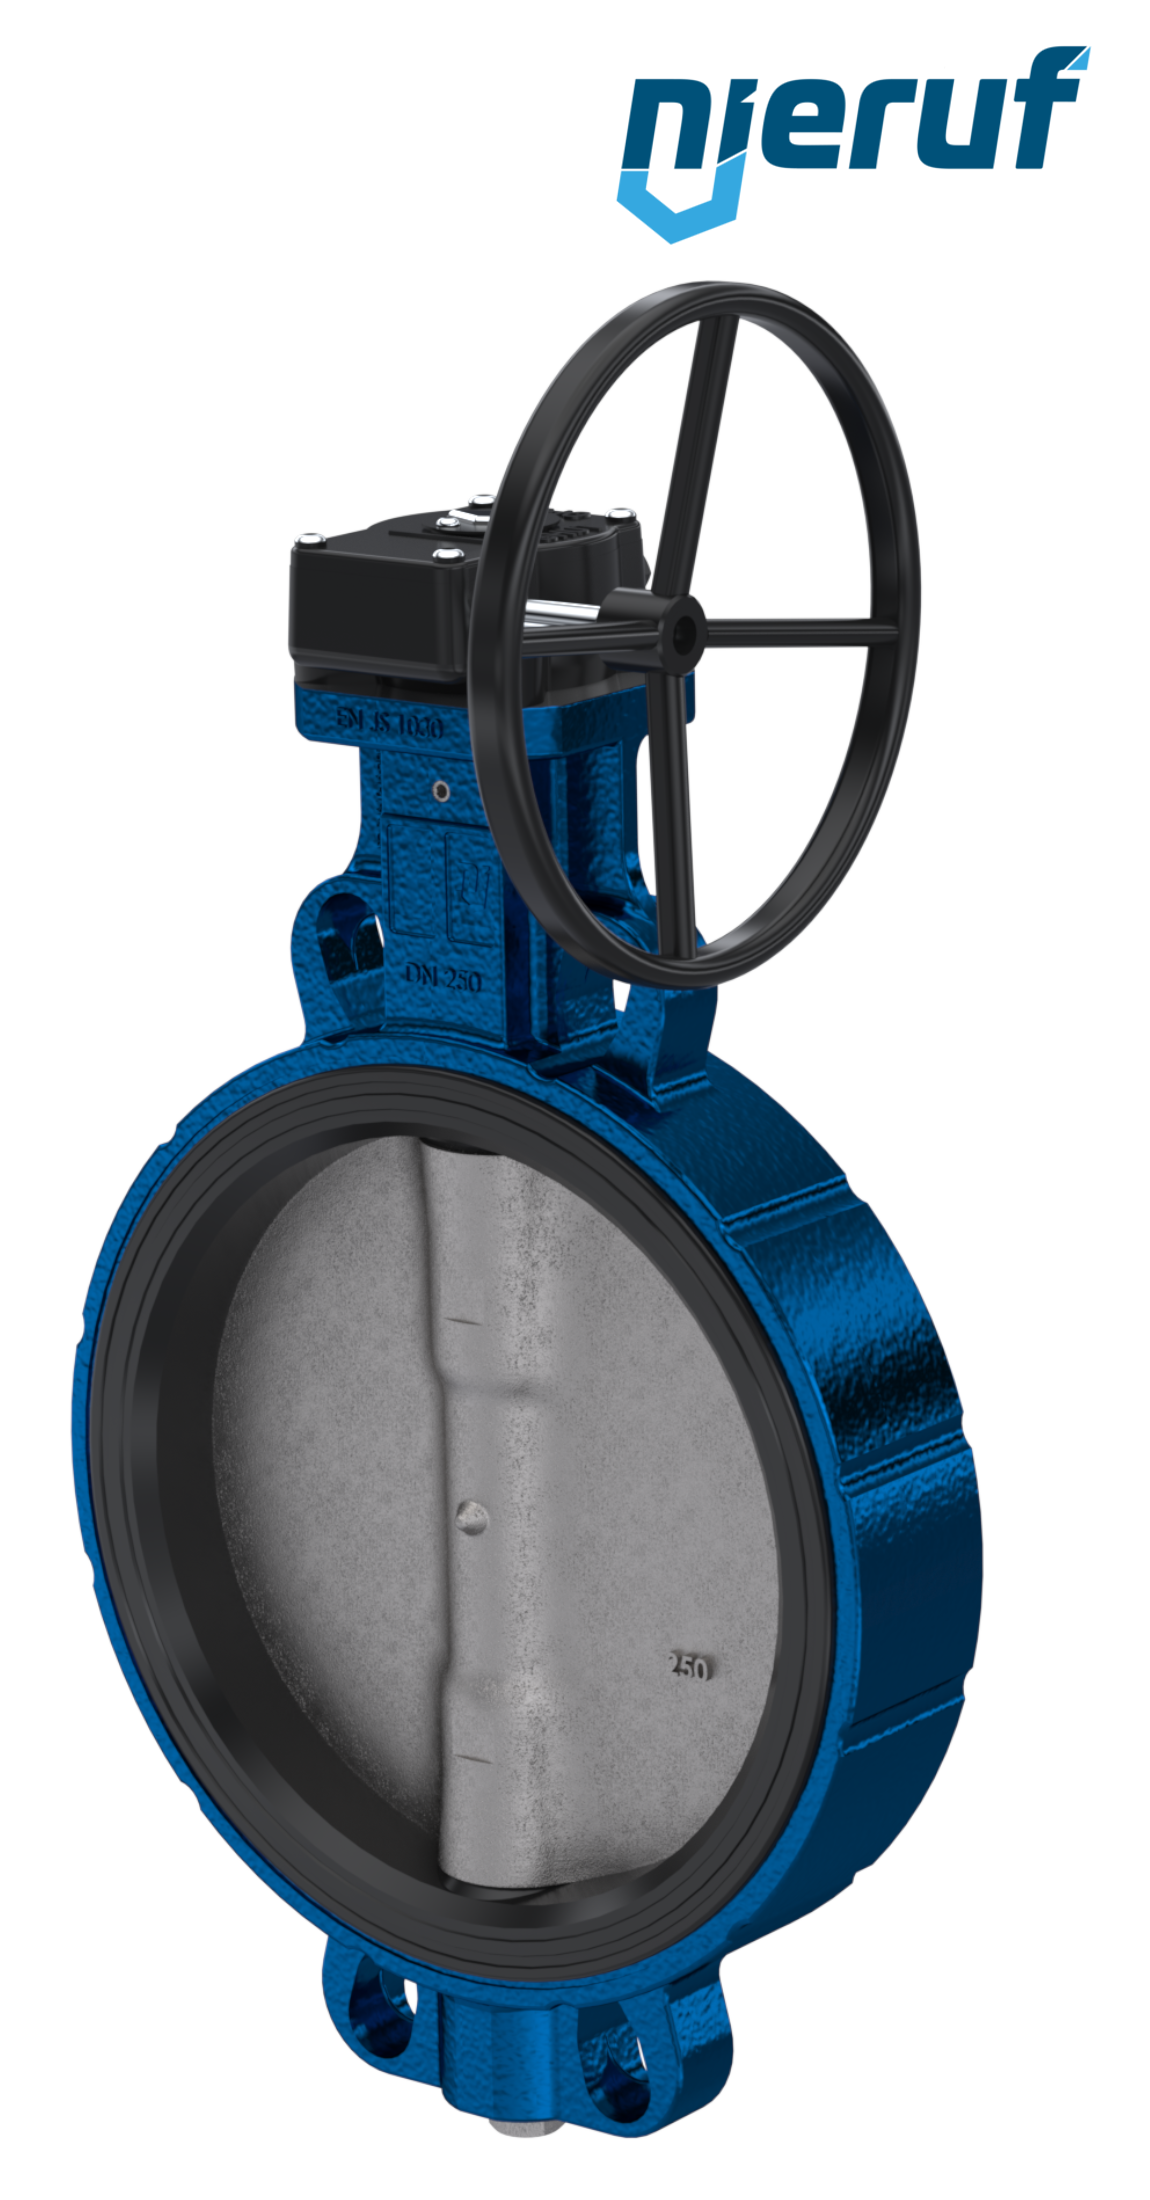 Butterfly valve AK01 DN 250 PN6-PN10-PN16 & ANSI150 DVGW-water Worm gear